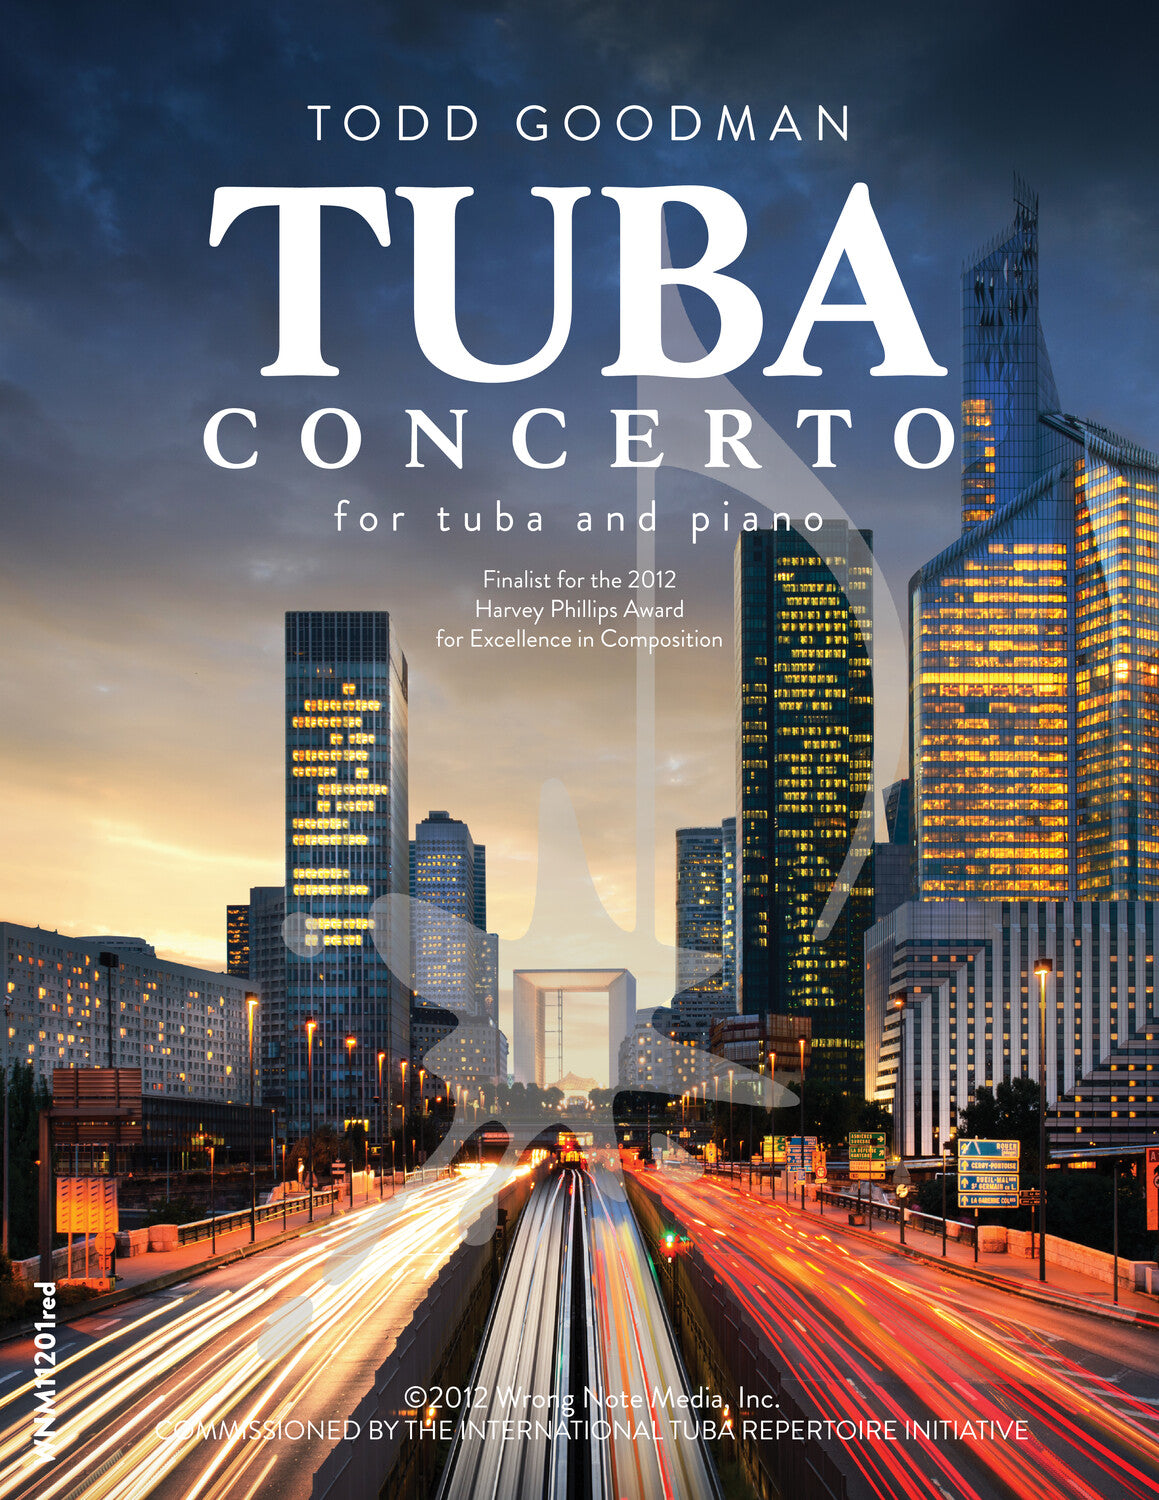 Goodman, Todd - Tuba Concerto